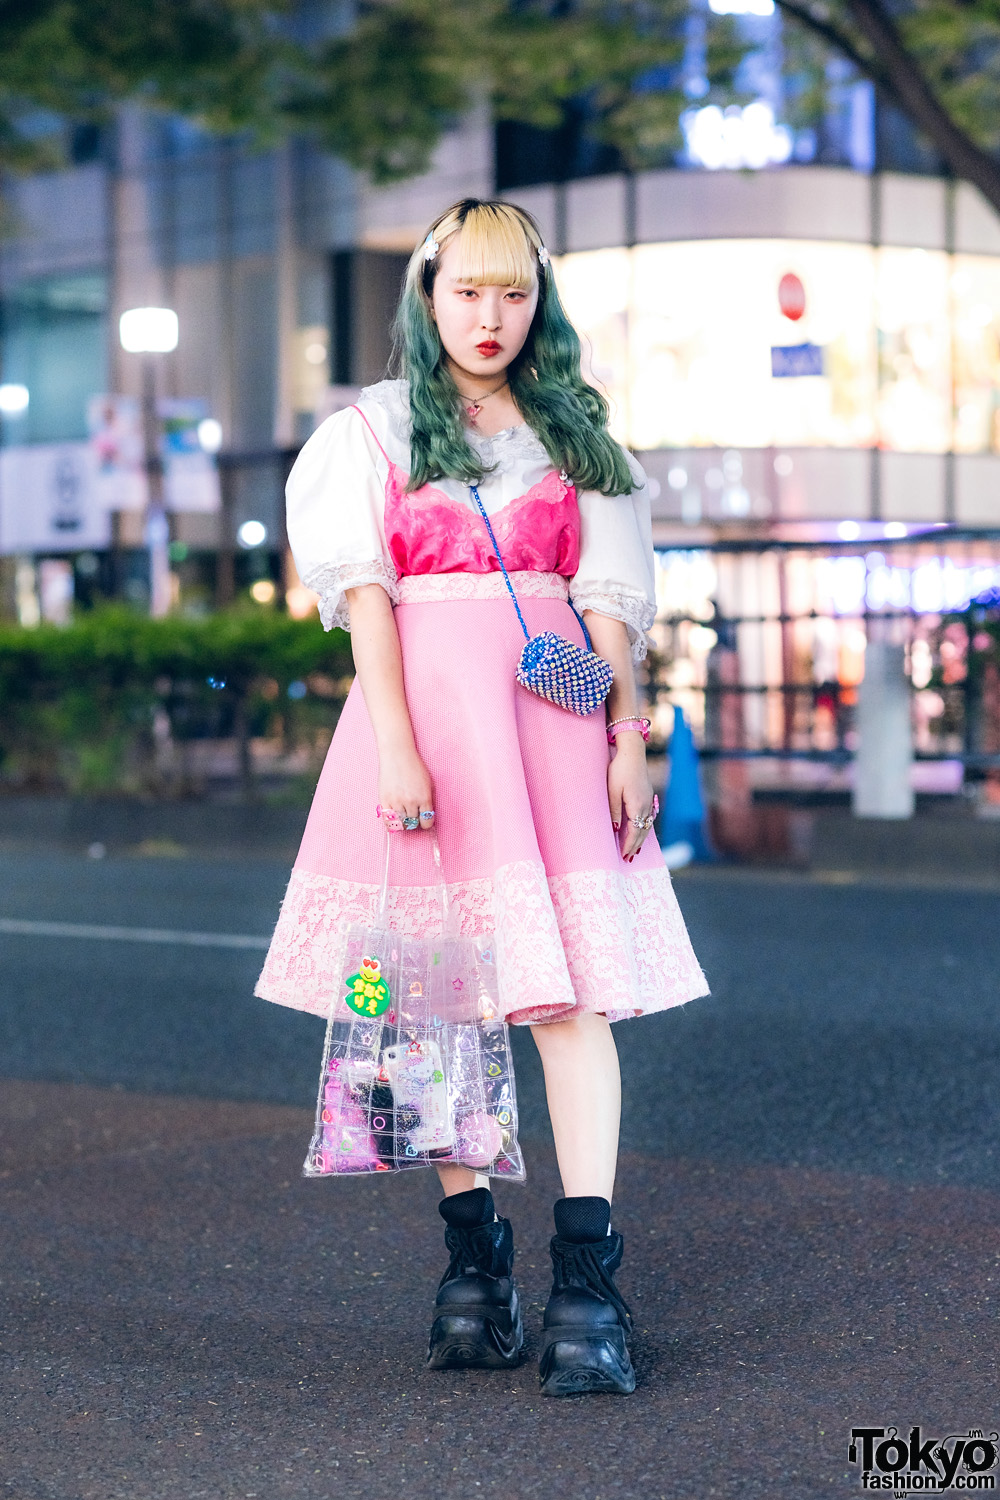 Harajuku Girl w/ White Lace Top, Pink Dress, Demonia Sneakers, New York Joe & Handmade Bag